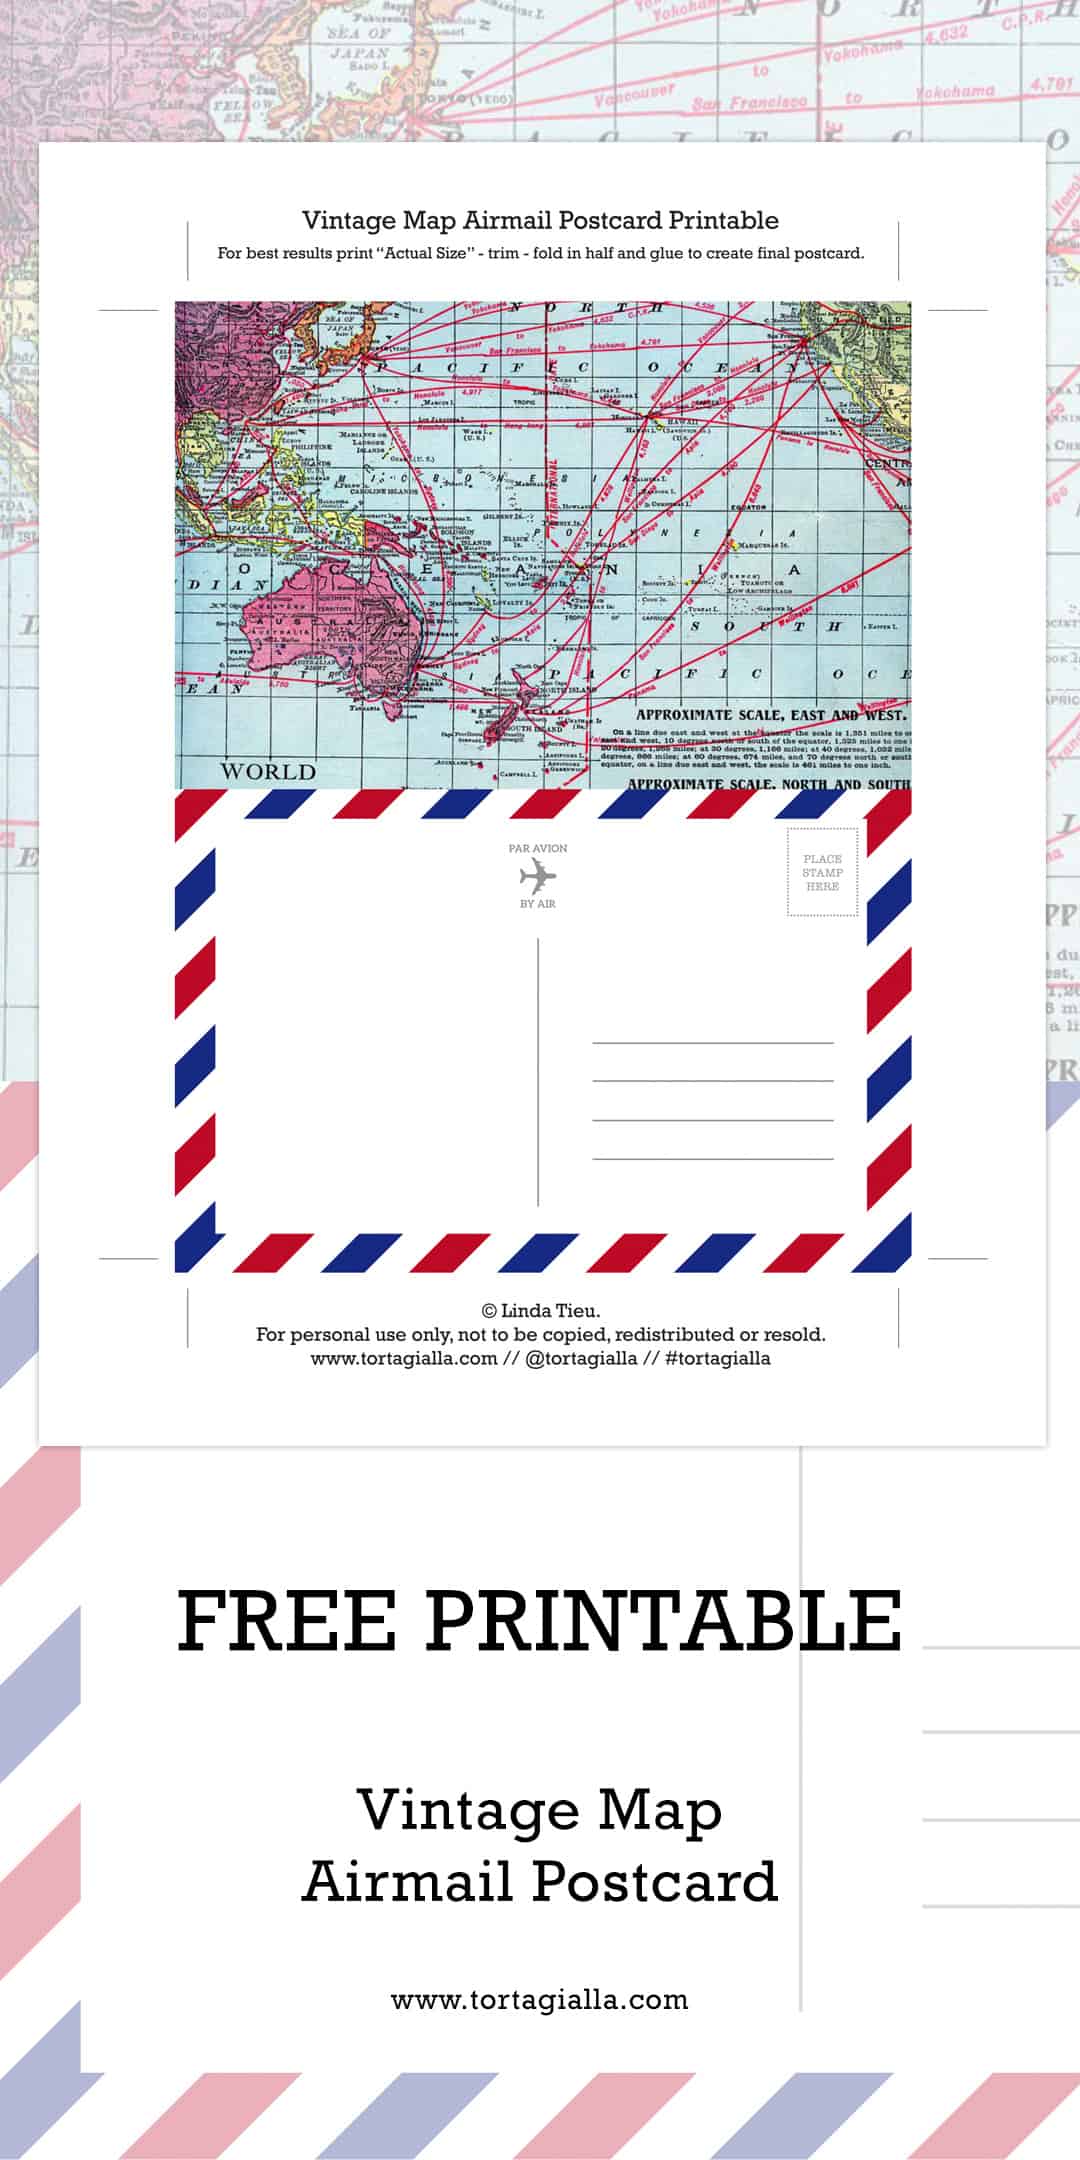 Vintage Map Airmail Postcard Printable PDF - Download on tortagialla.com